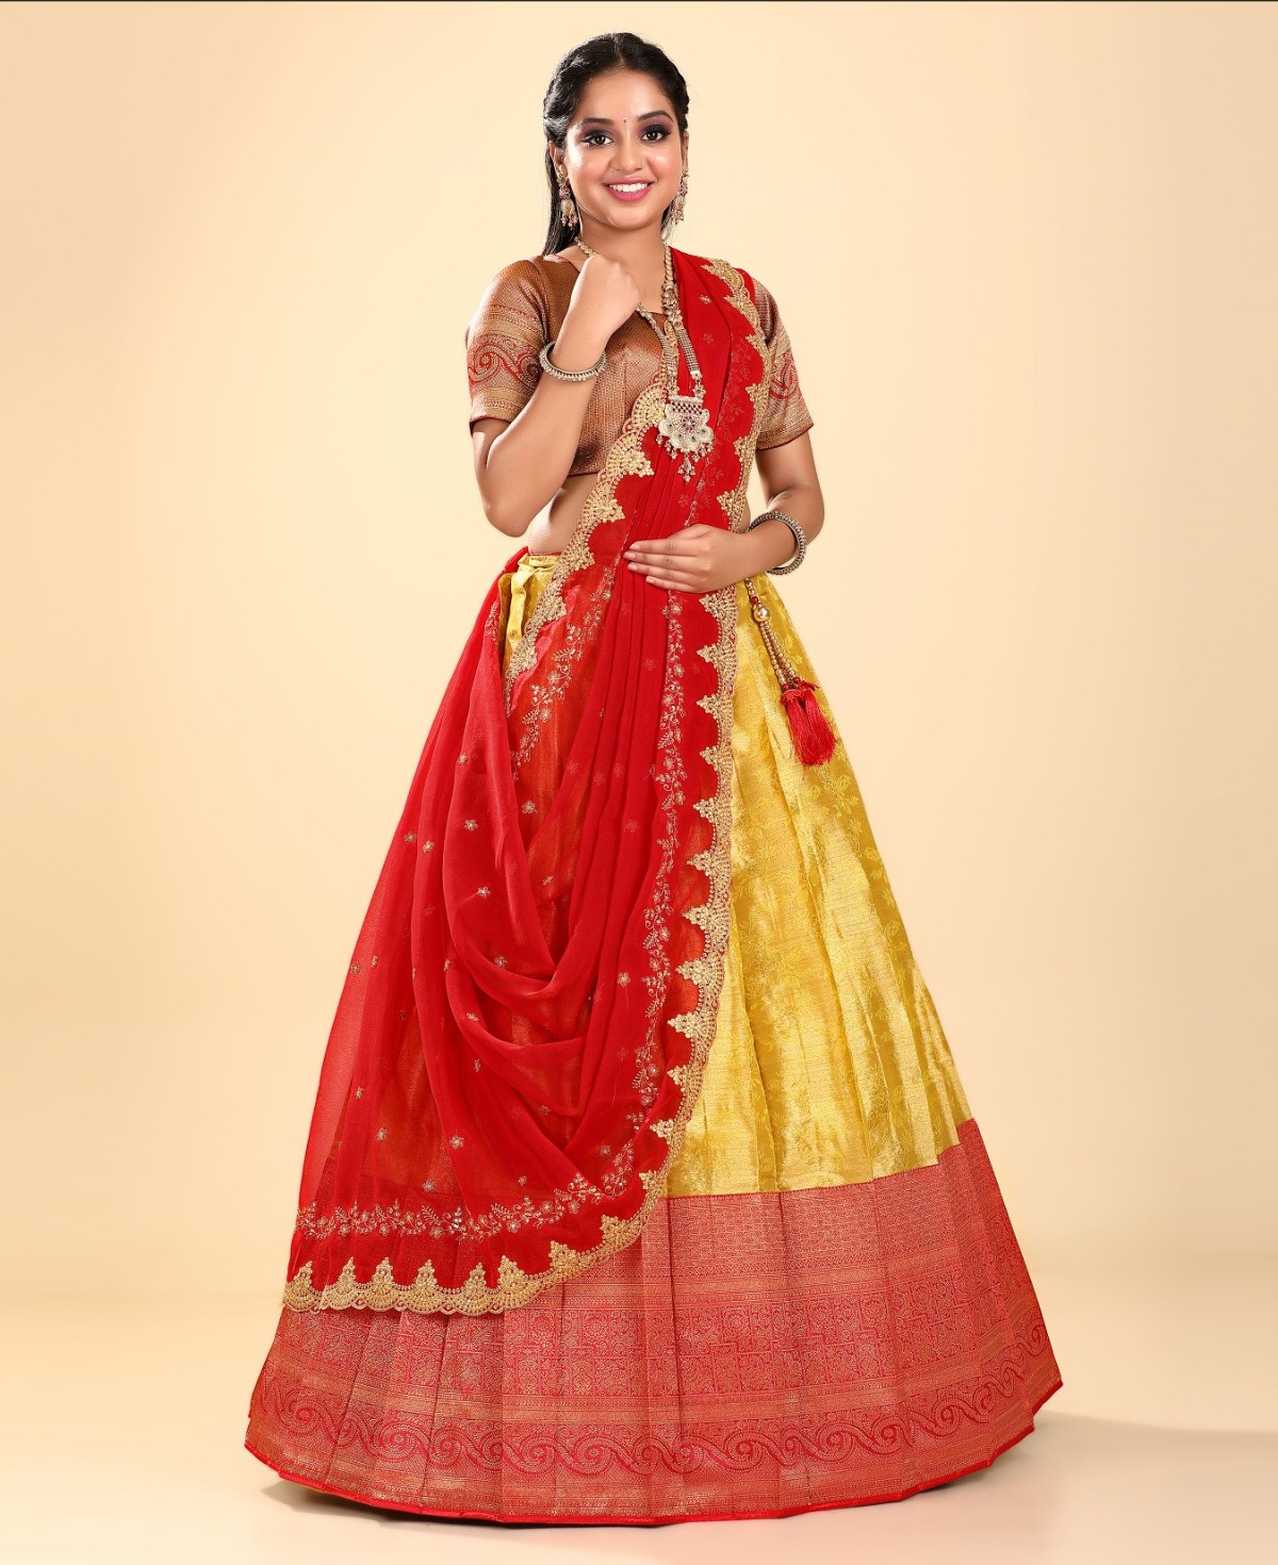 New And Trendy Banarasi Lehenga Designs And Images 2020 | Lehenga designs,  Indian bridal wear, Indian wedding lehenga